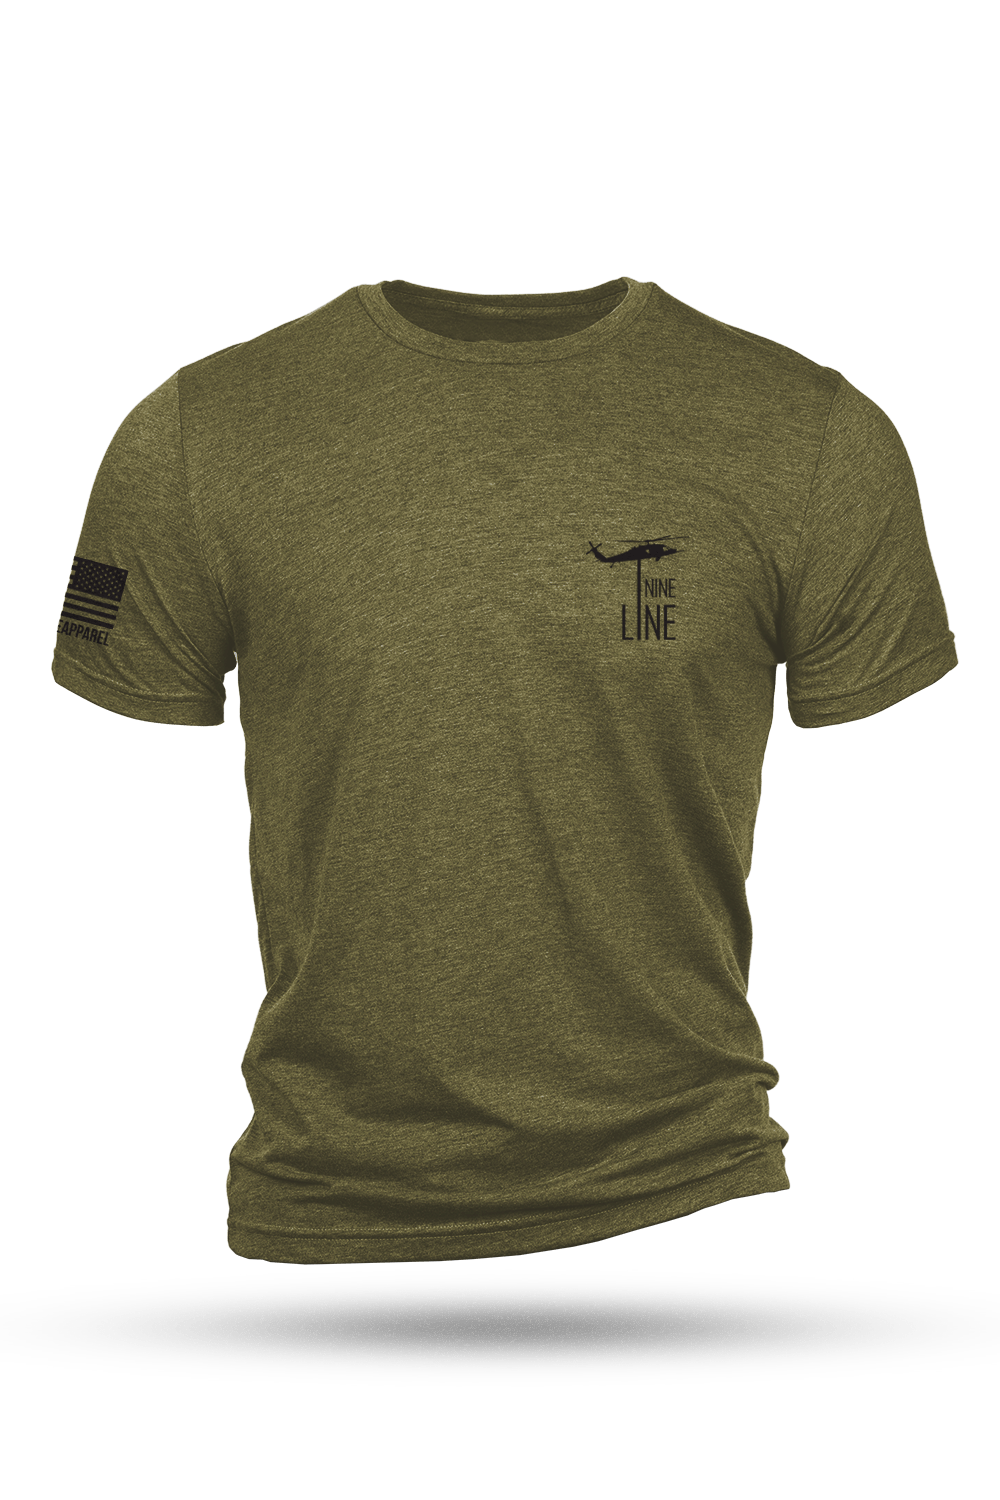 T-Shirt - Warheads on Foreheads - Nine Line Apparel